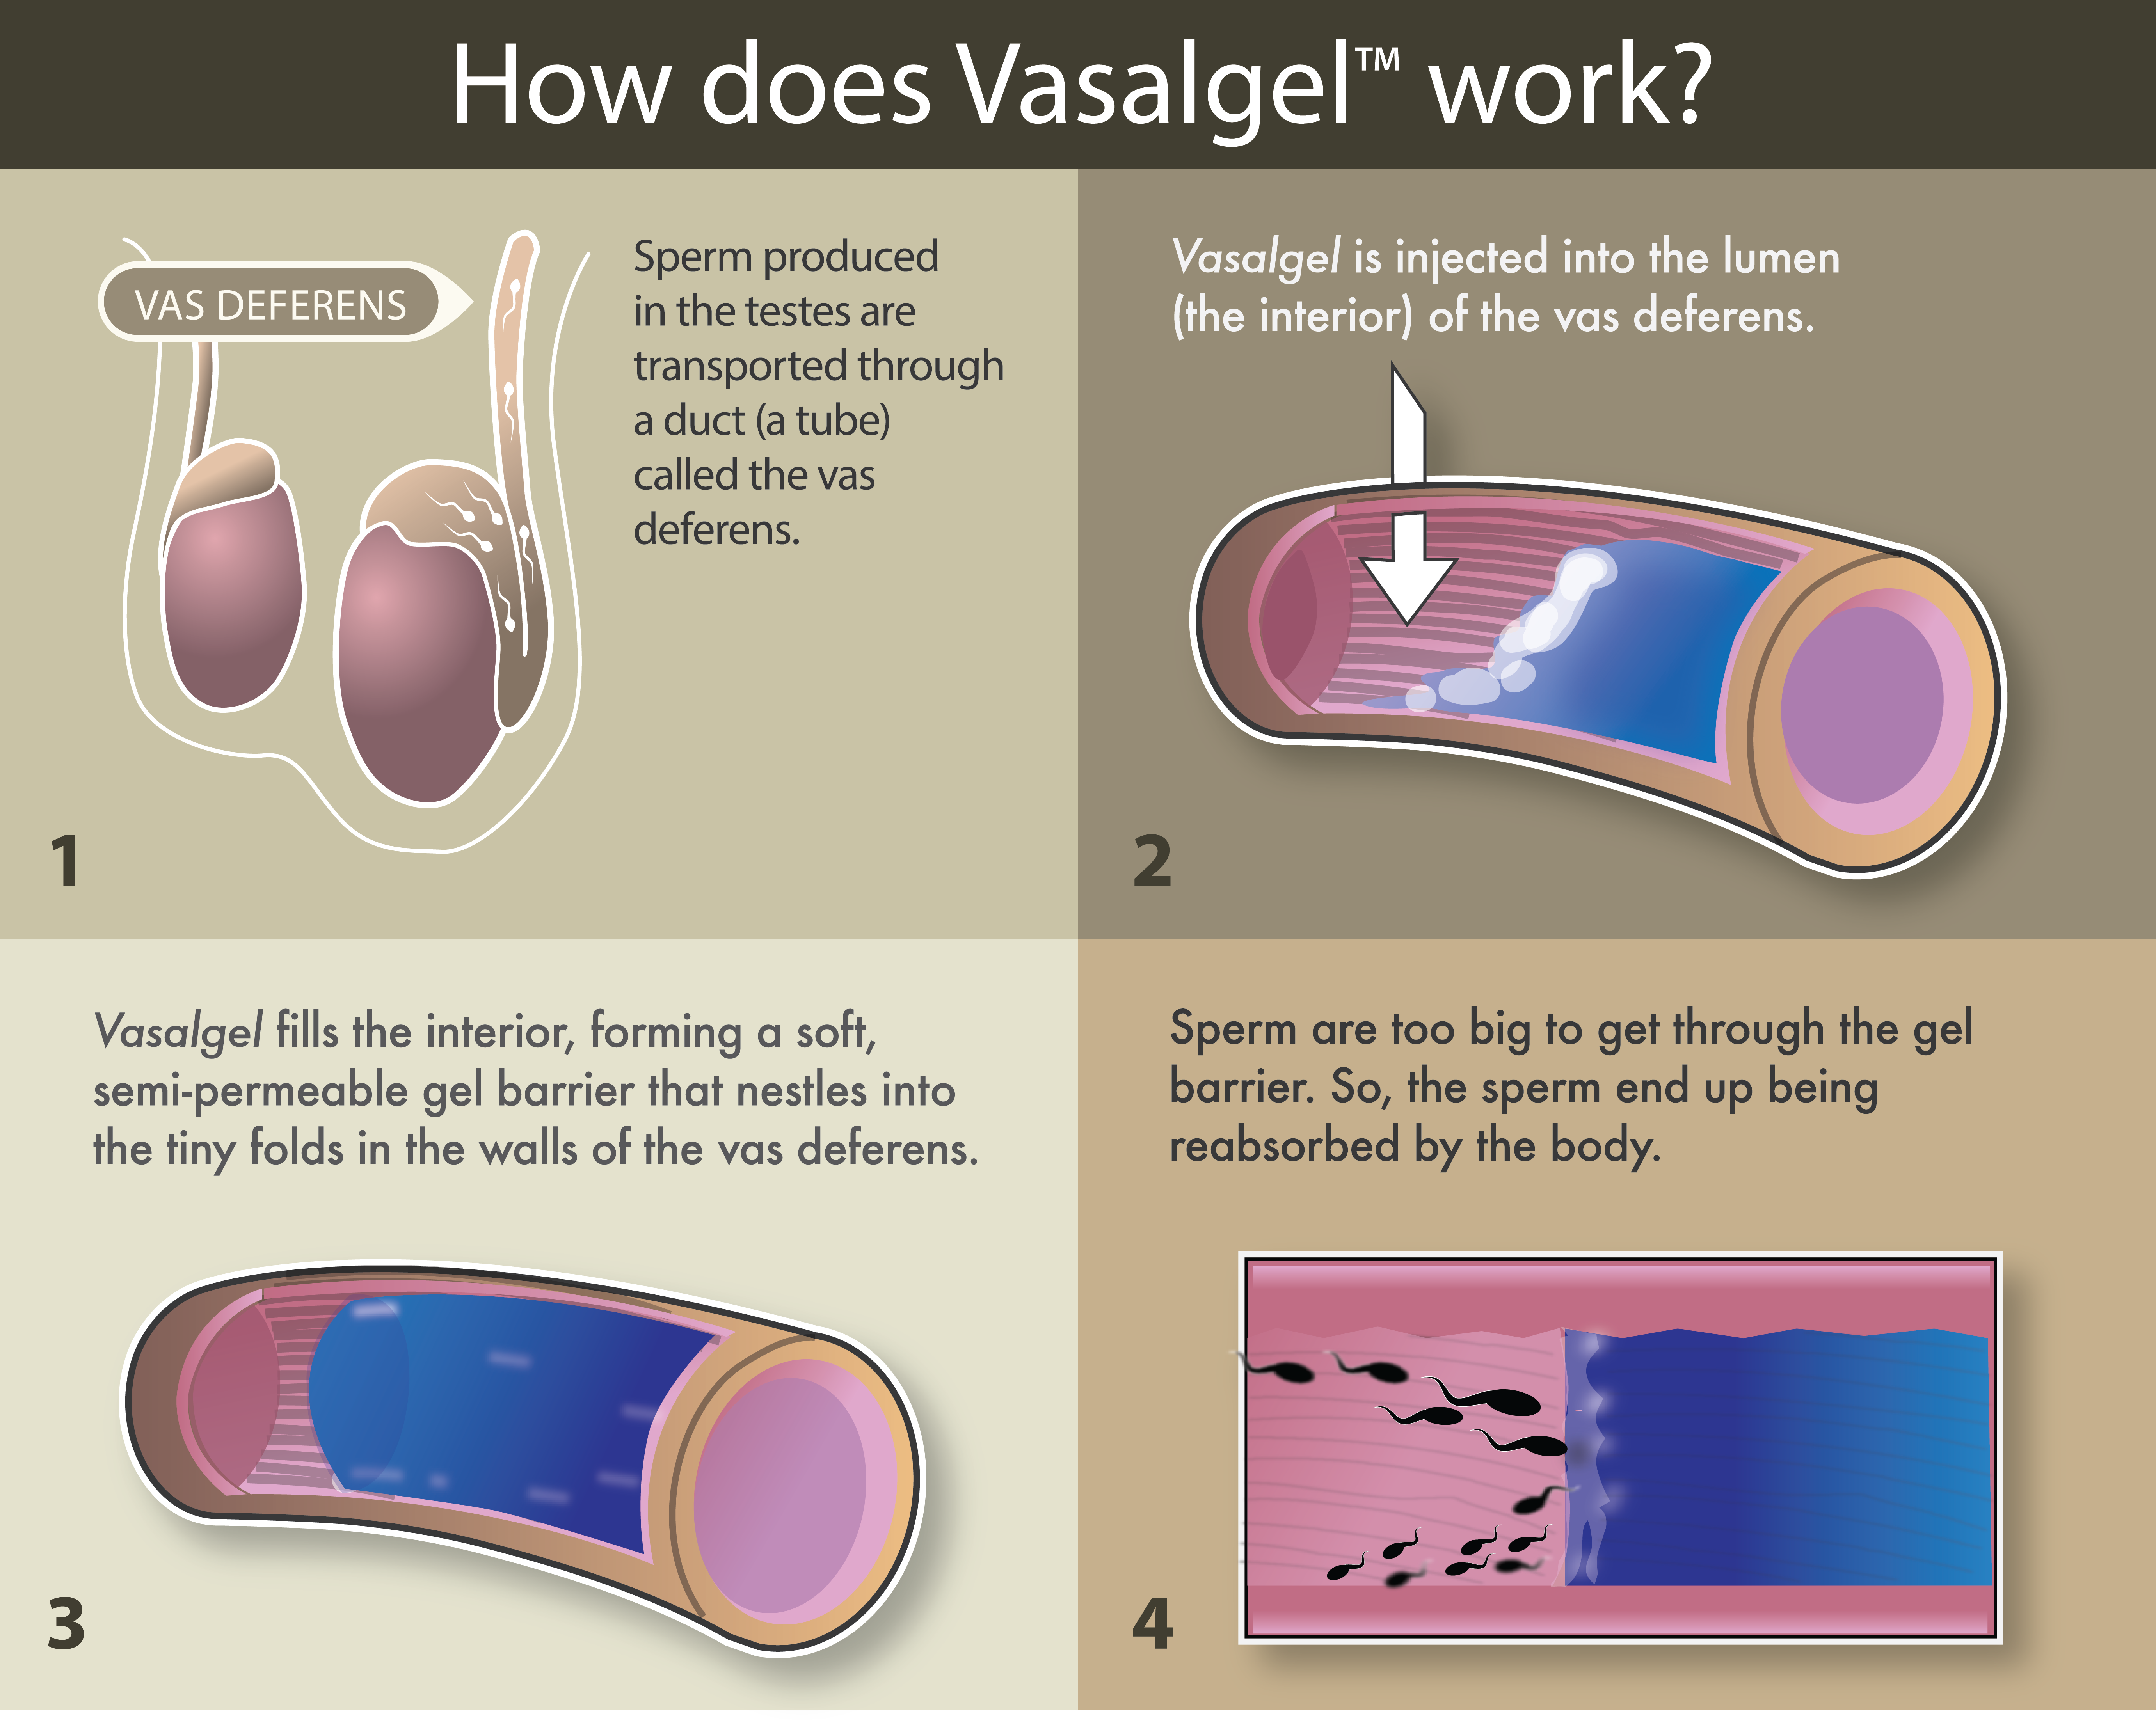 Infographic shows how Vasalgel works.